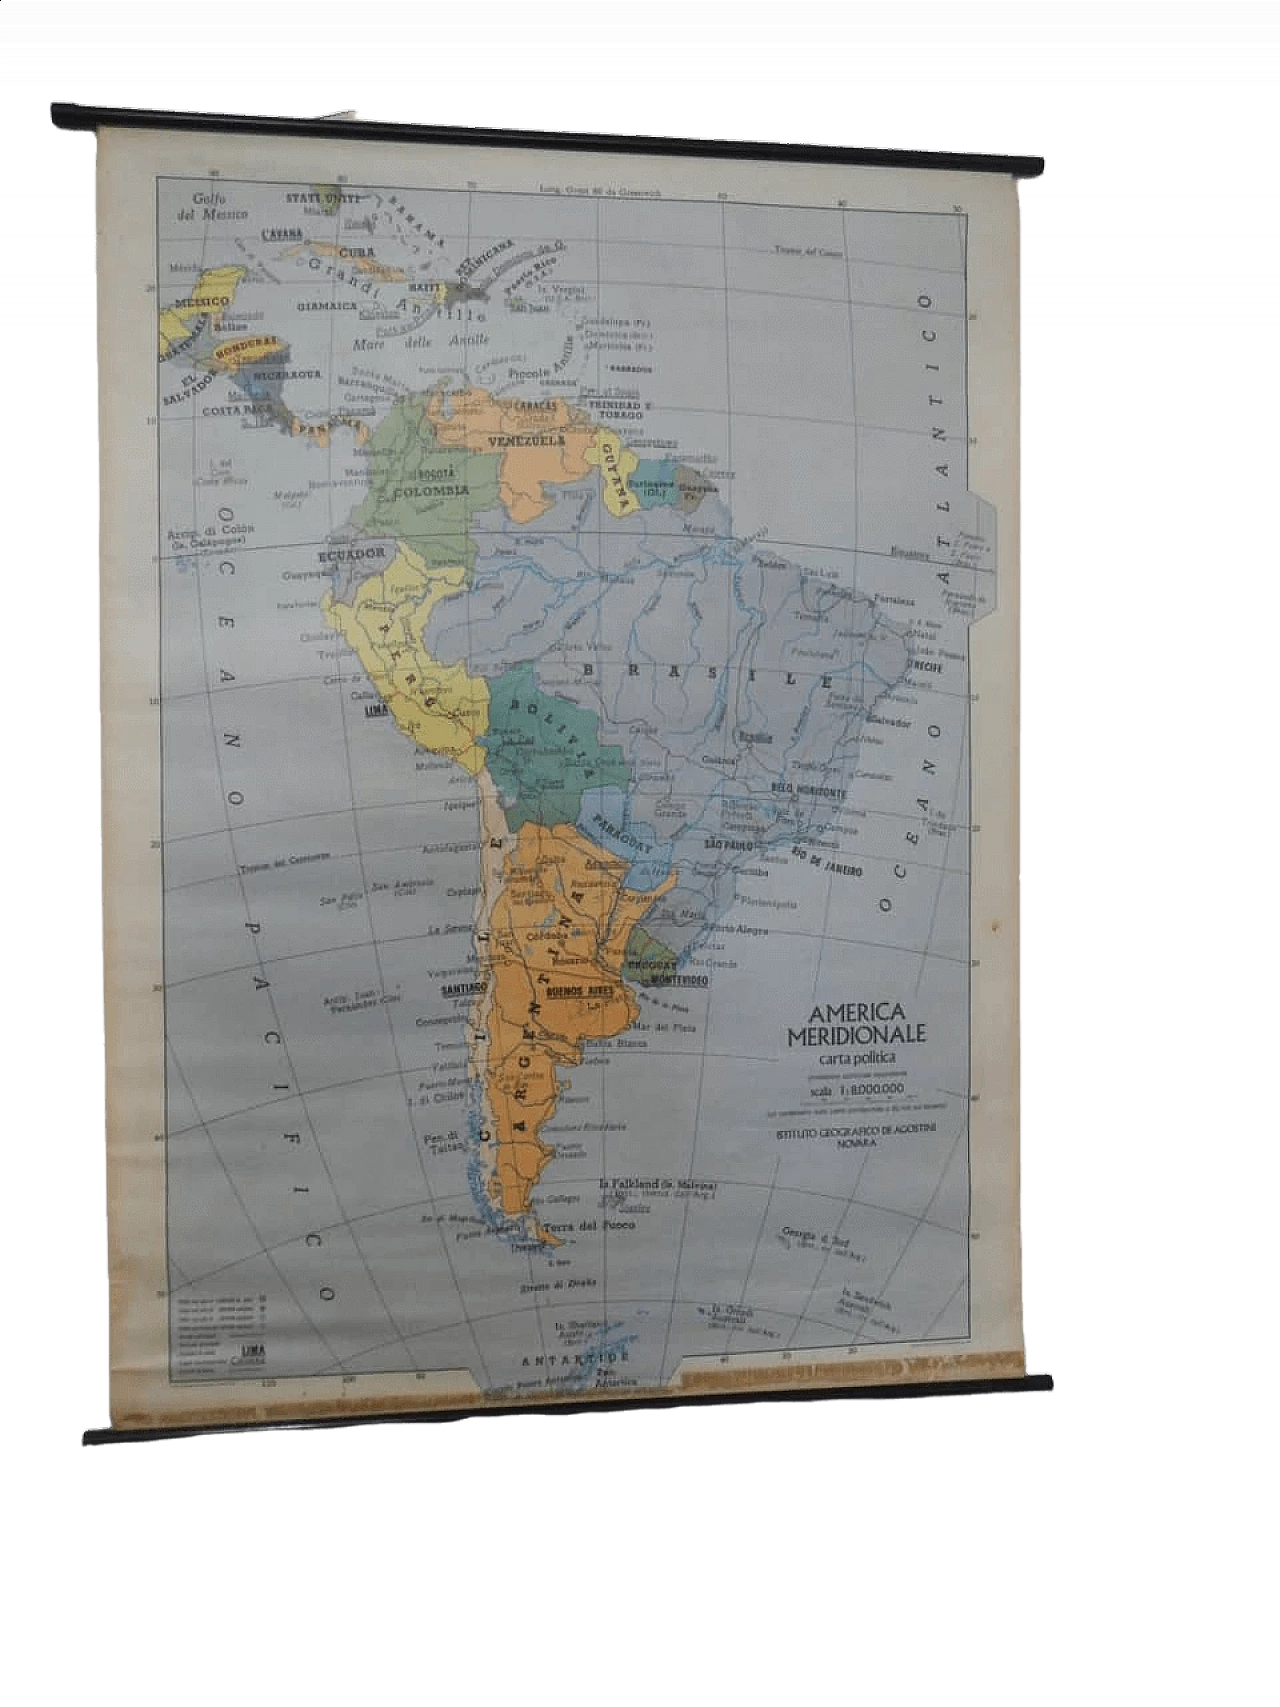 South America map by IGDA Officine Grafiche, 1970s 13